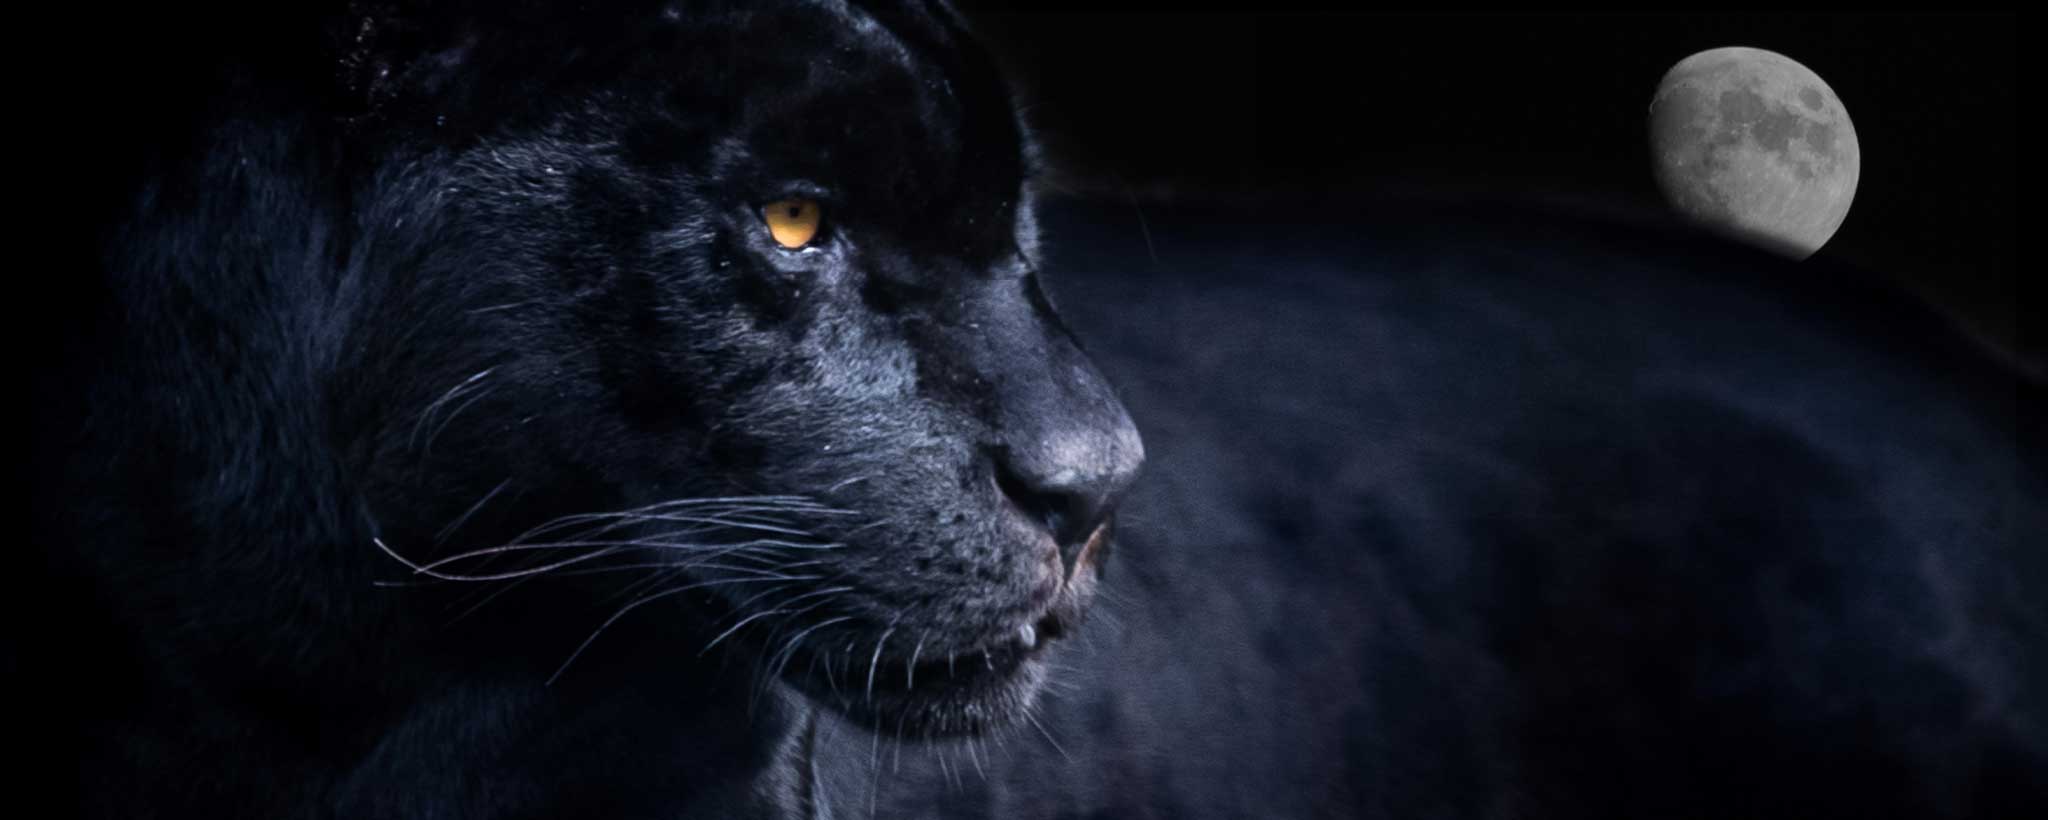 'Black Panther wild cat'